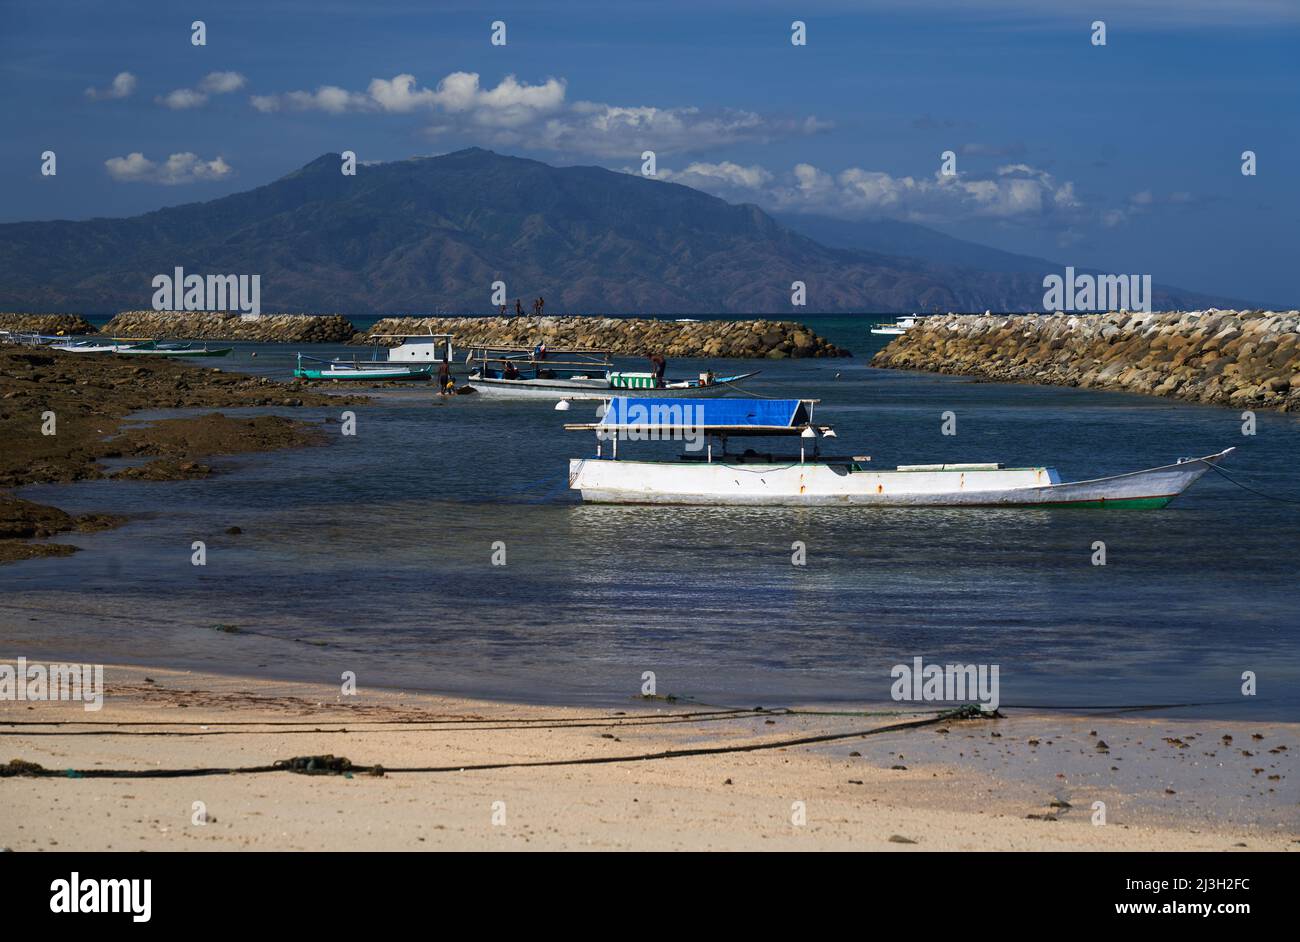 Strand mit Fischerboot in Asien. Sikka Regency, East Nusa Tenggara, Flores, Indonesien. Stockfoto